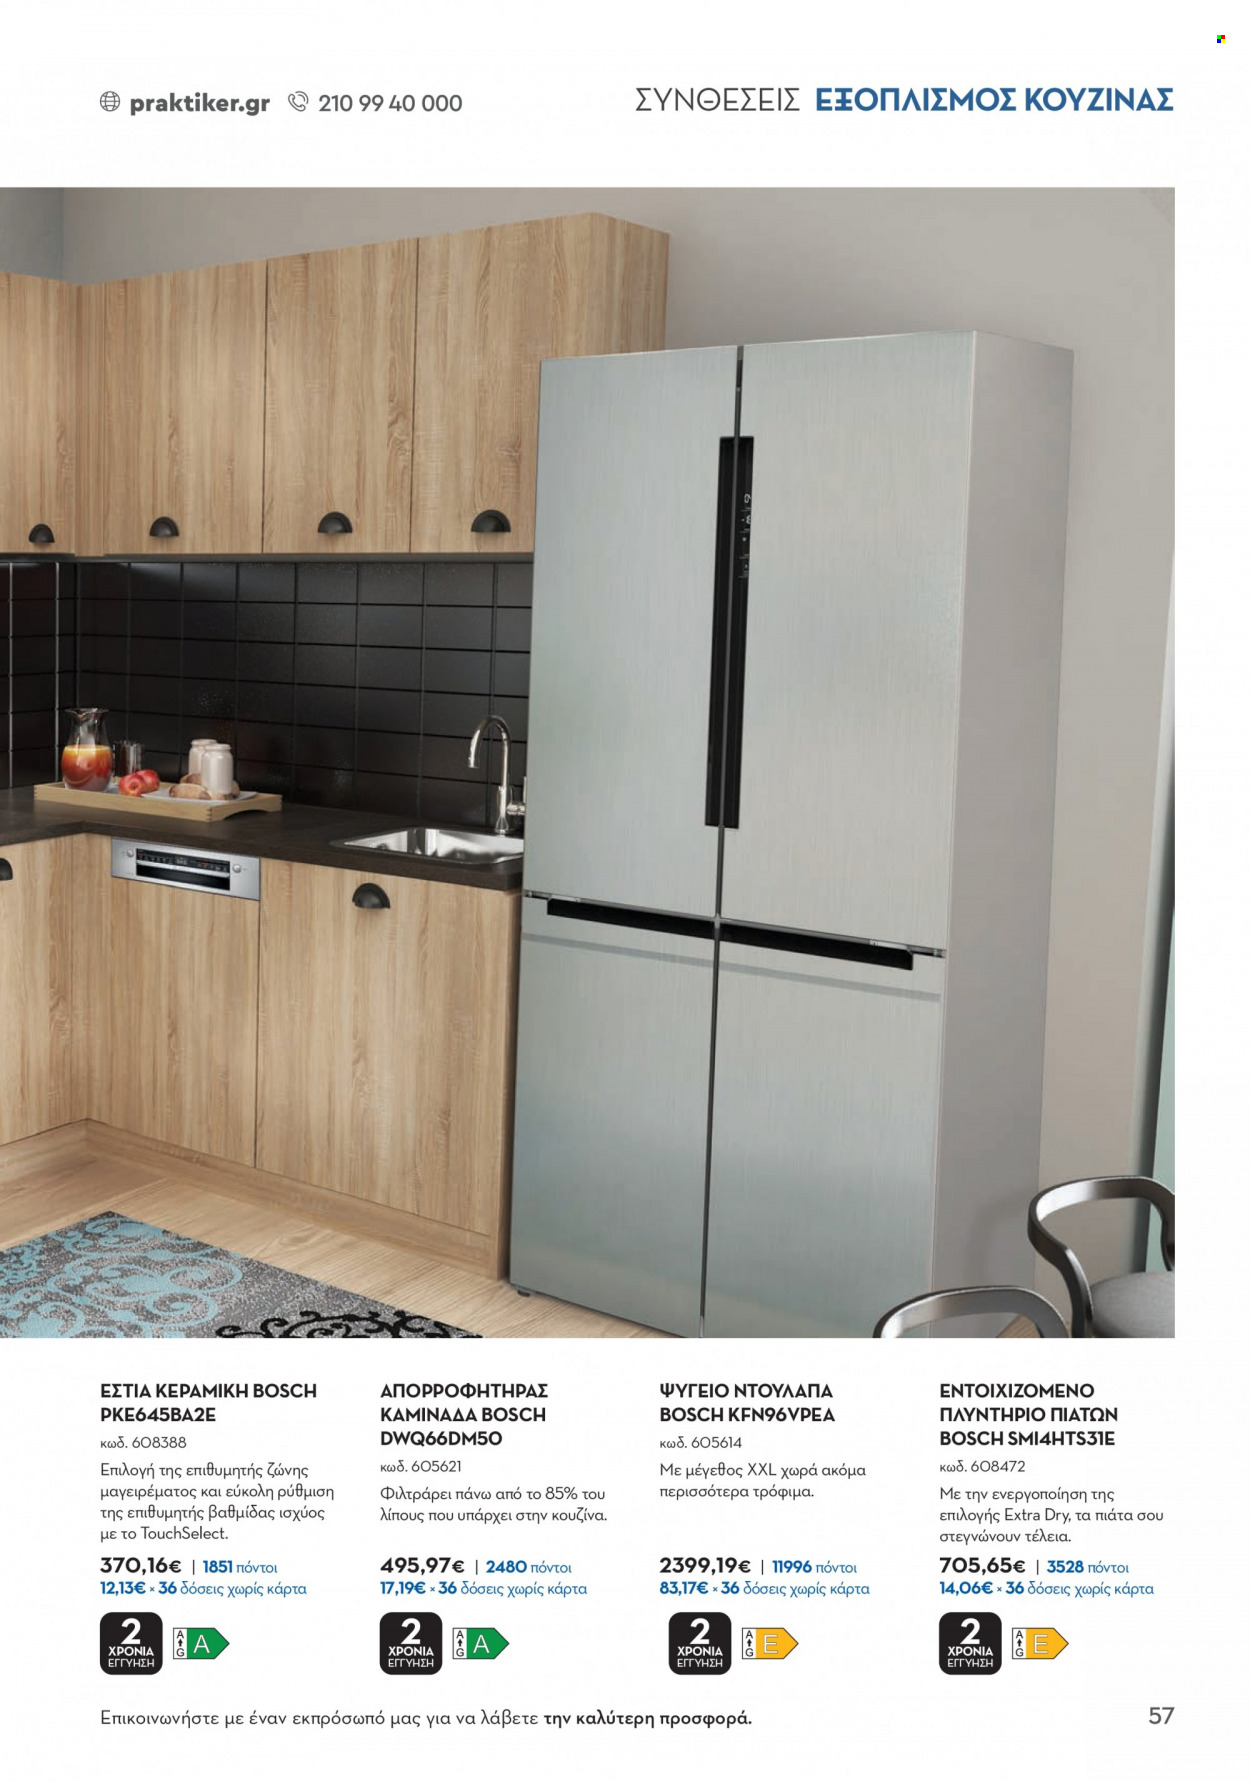 thumbnail - Φυλλάδια Praktiker - Εκπτωτικά προϊόντα - ντουλάπα, Bosch, ψυγείο, κουζινας. Σελίδα 57.